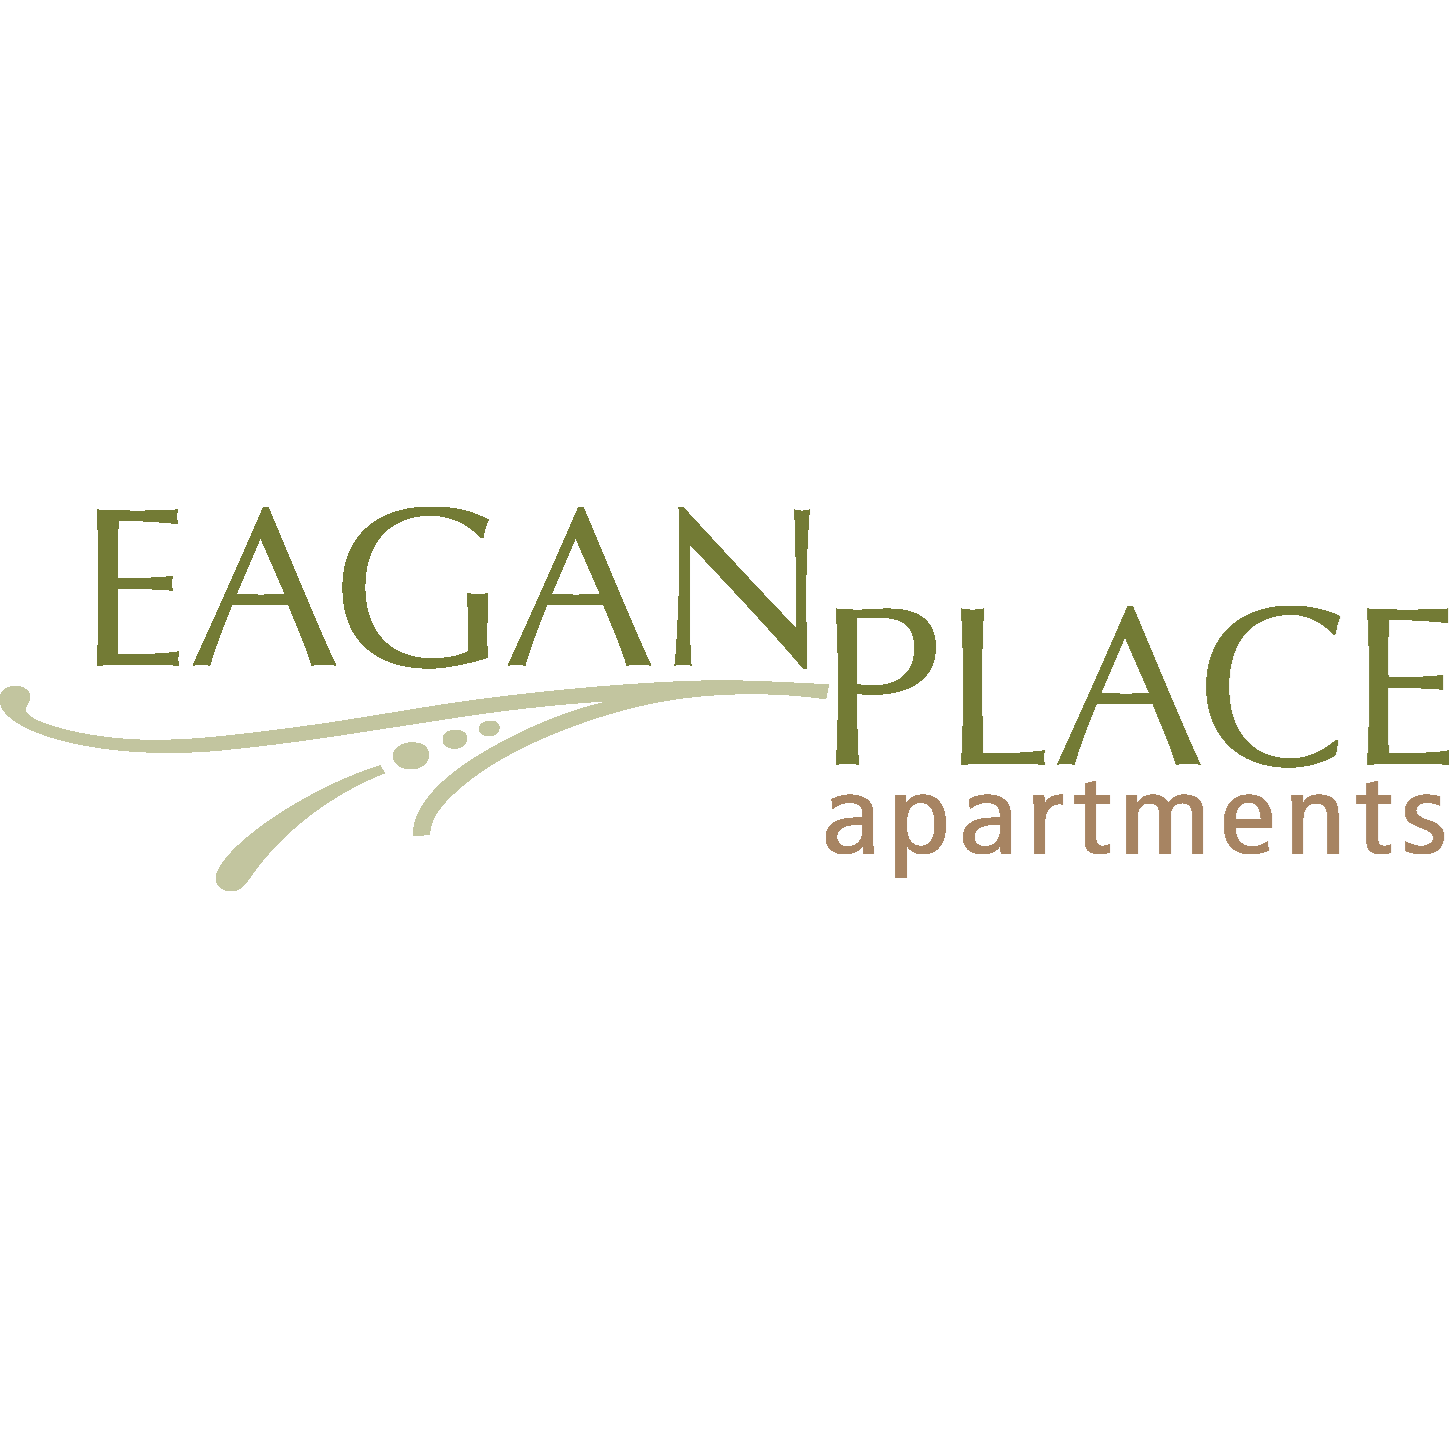 Eagan Place Apartments - Eagan, MN 55123 - (651)452-3280 | ShowMeLocal.com